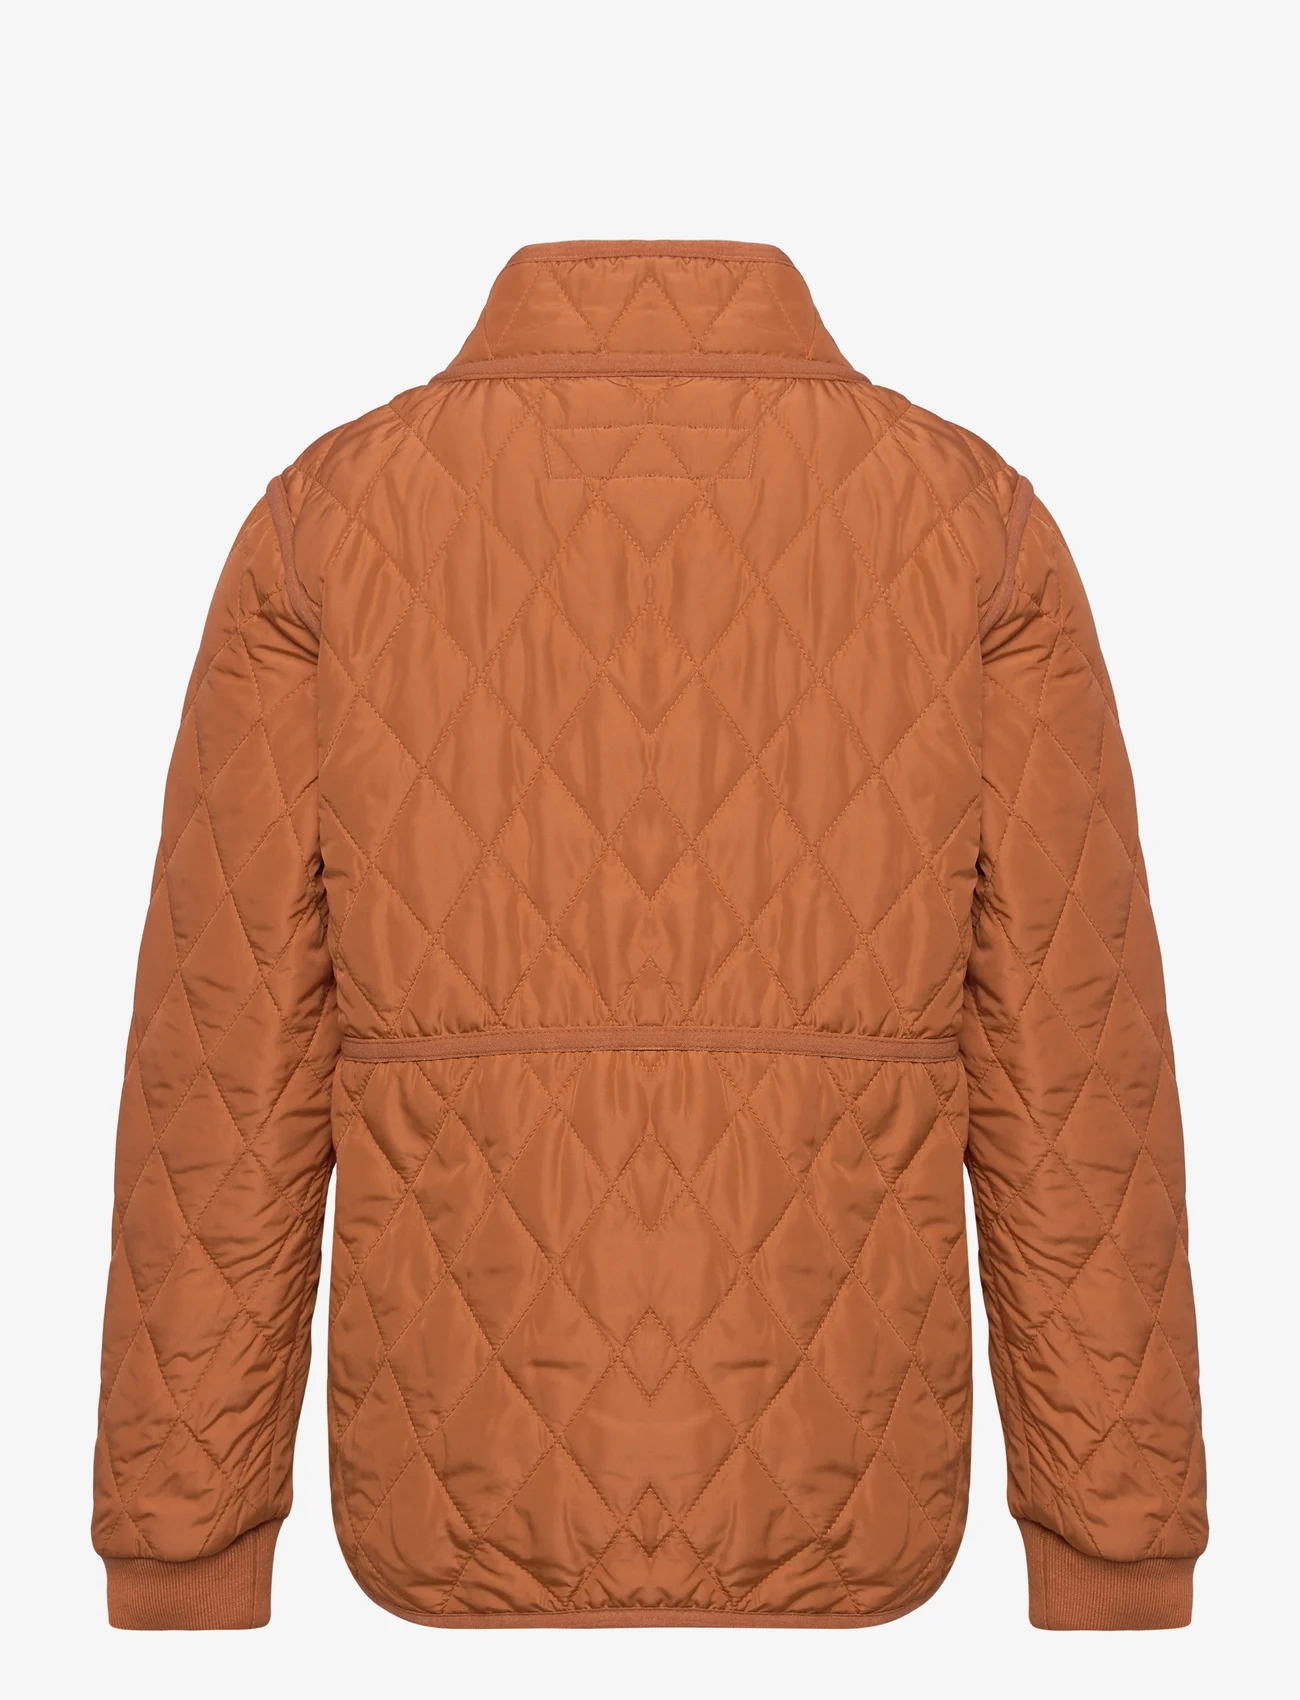 Mini A Ture - Lou thermo jacket. GRS - termojackor - adobe - 1